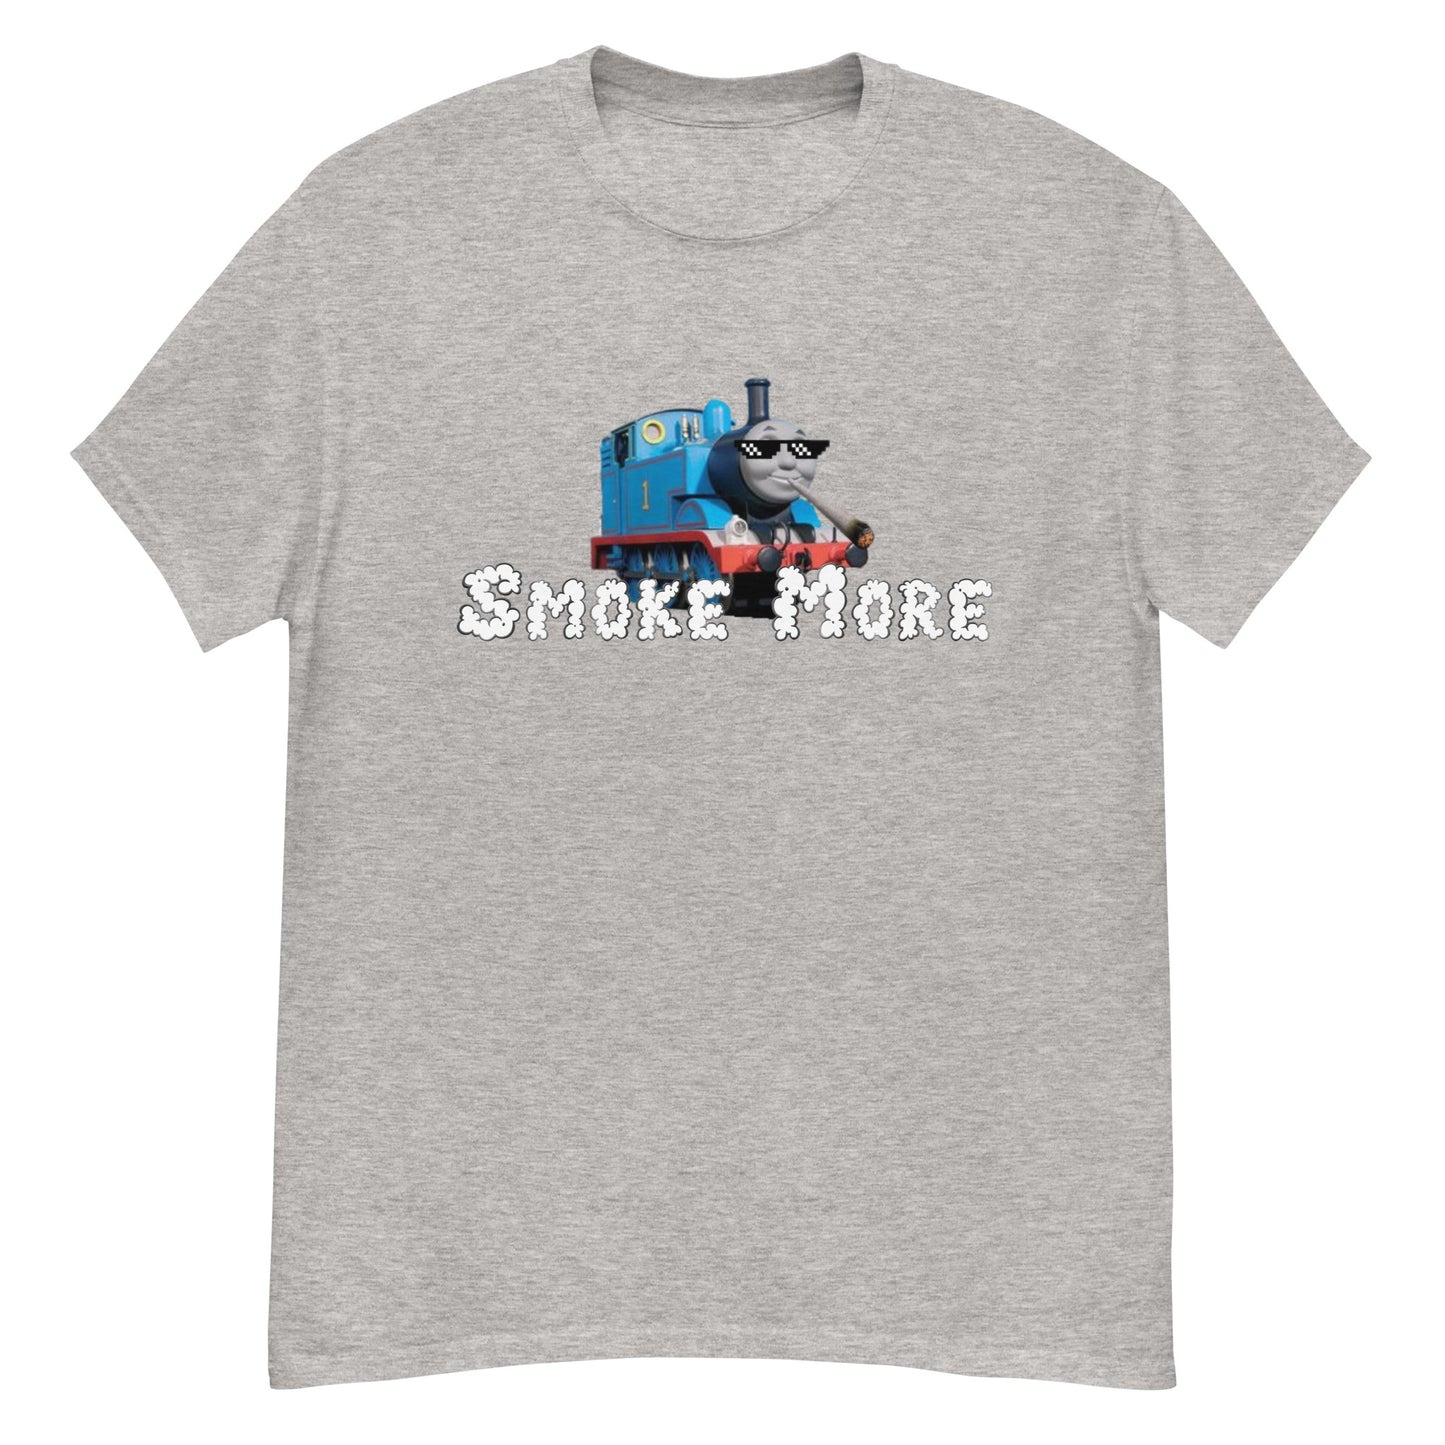 Thomas The SmokeMore - classic tee